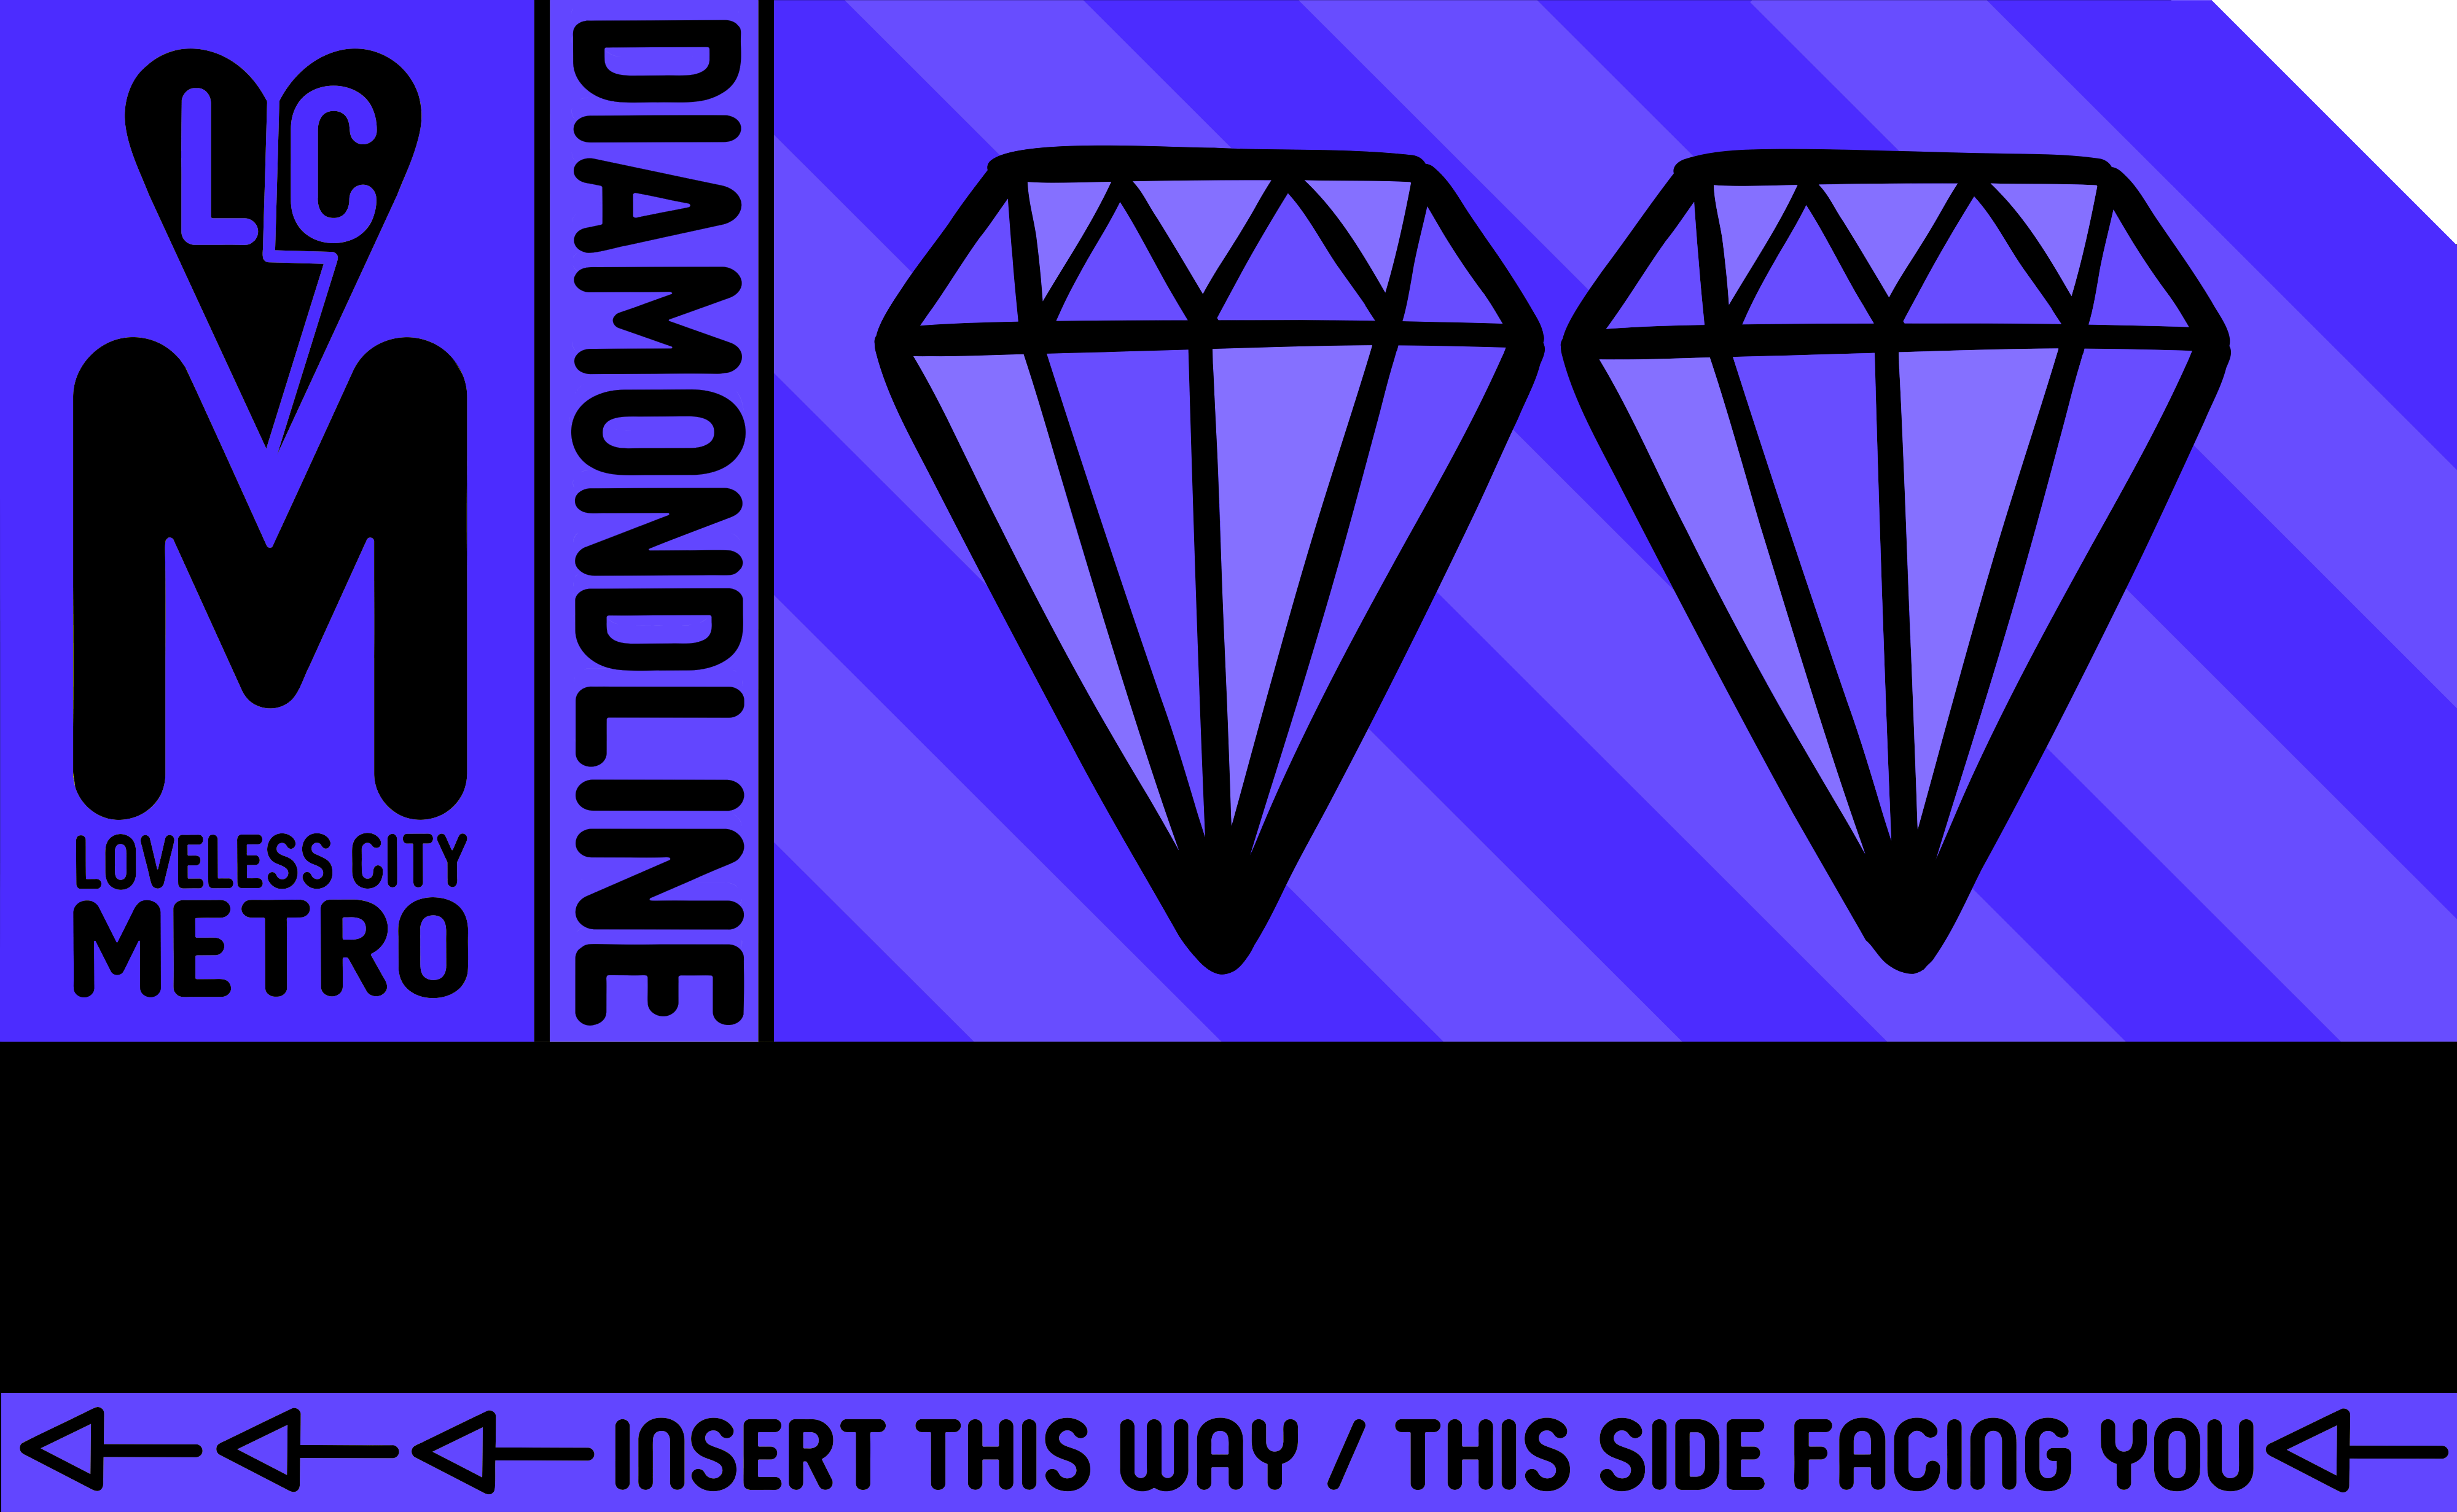 DiamondLine Metropass